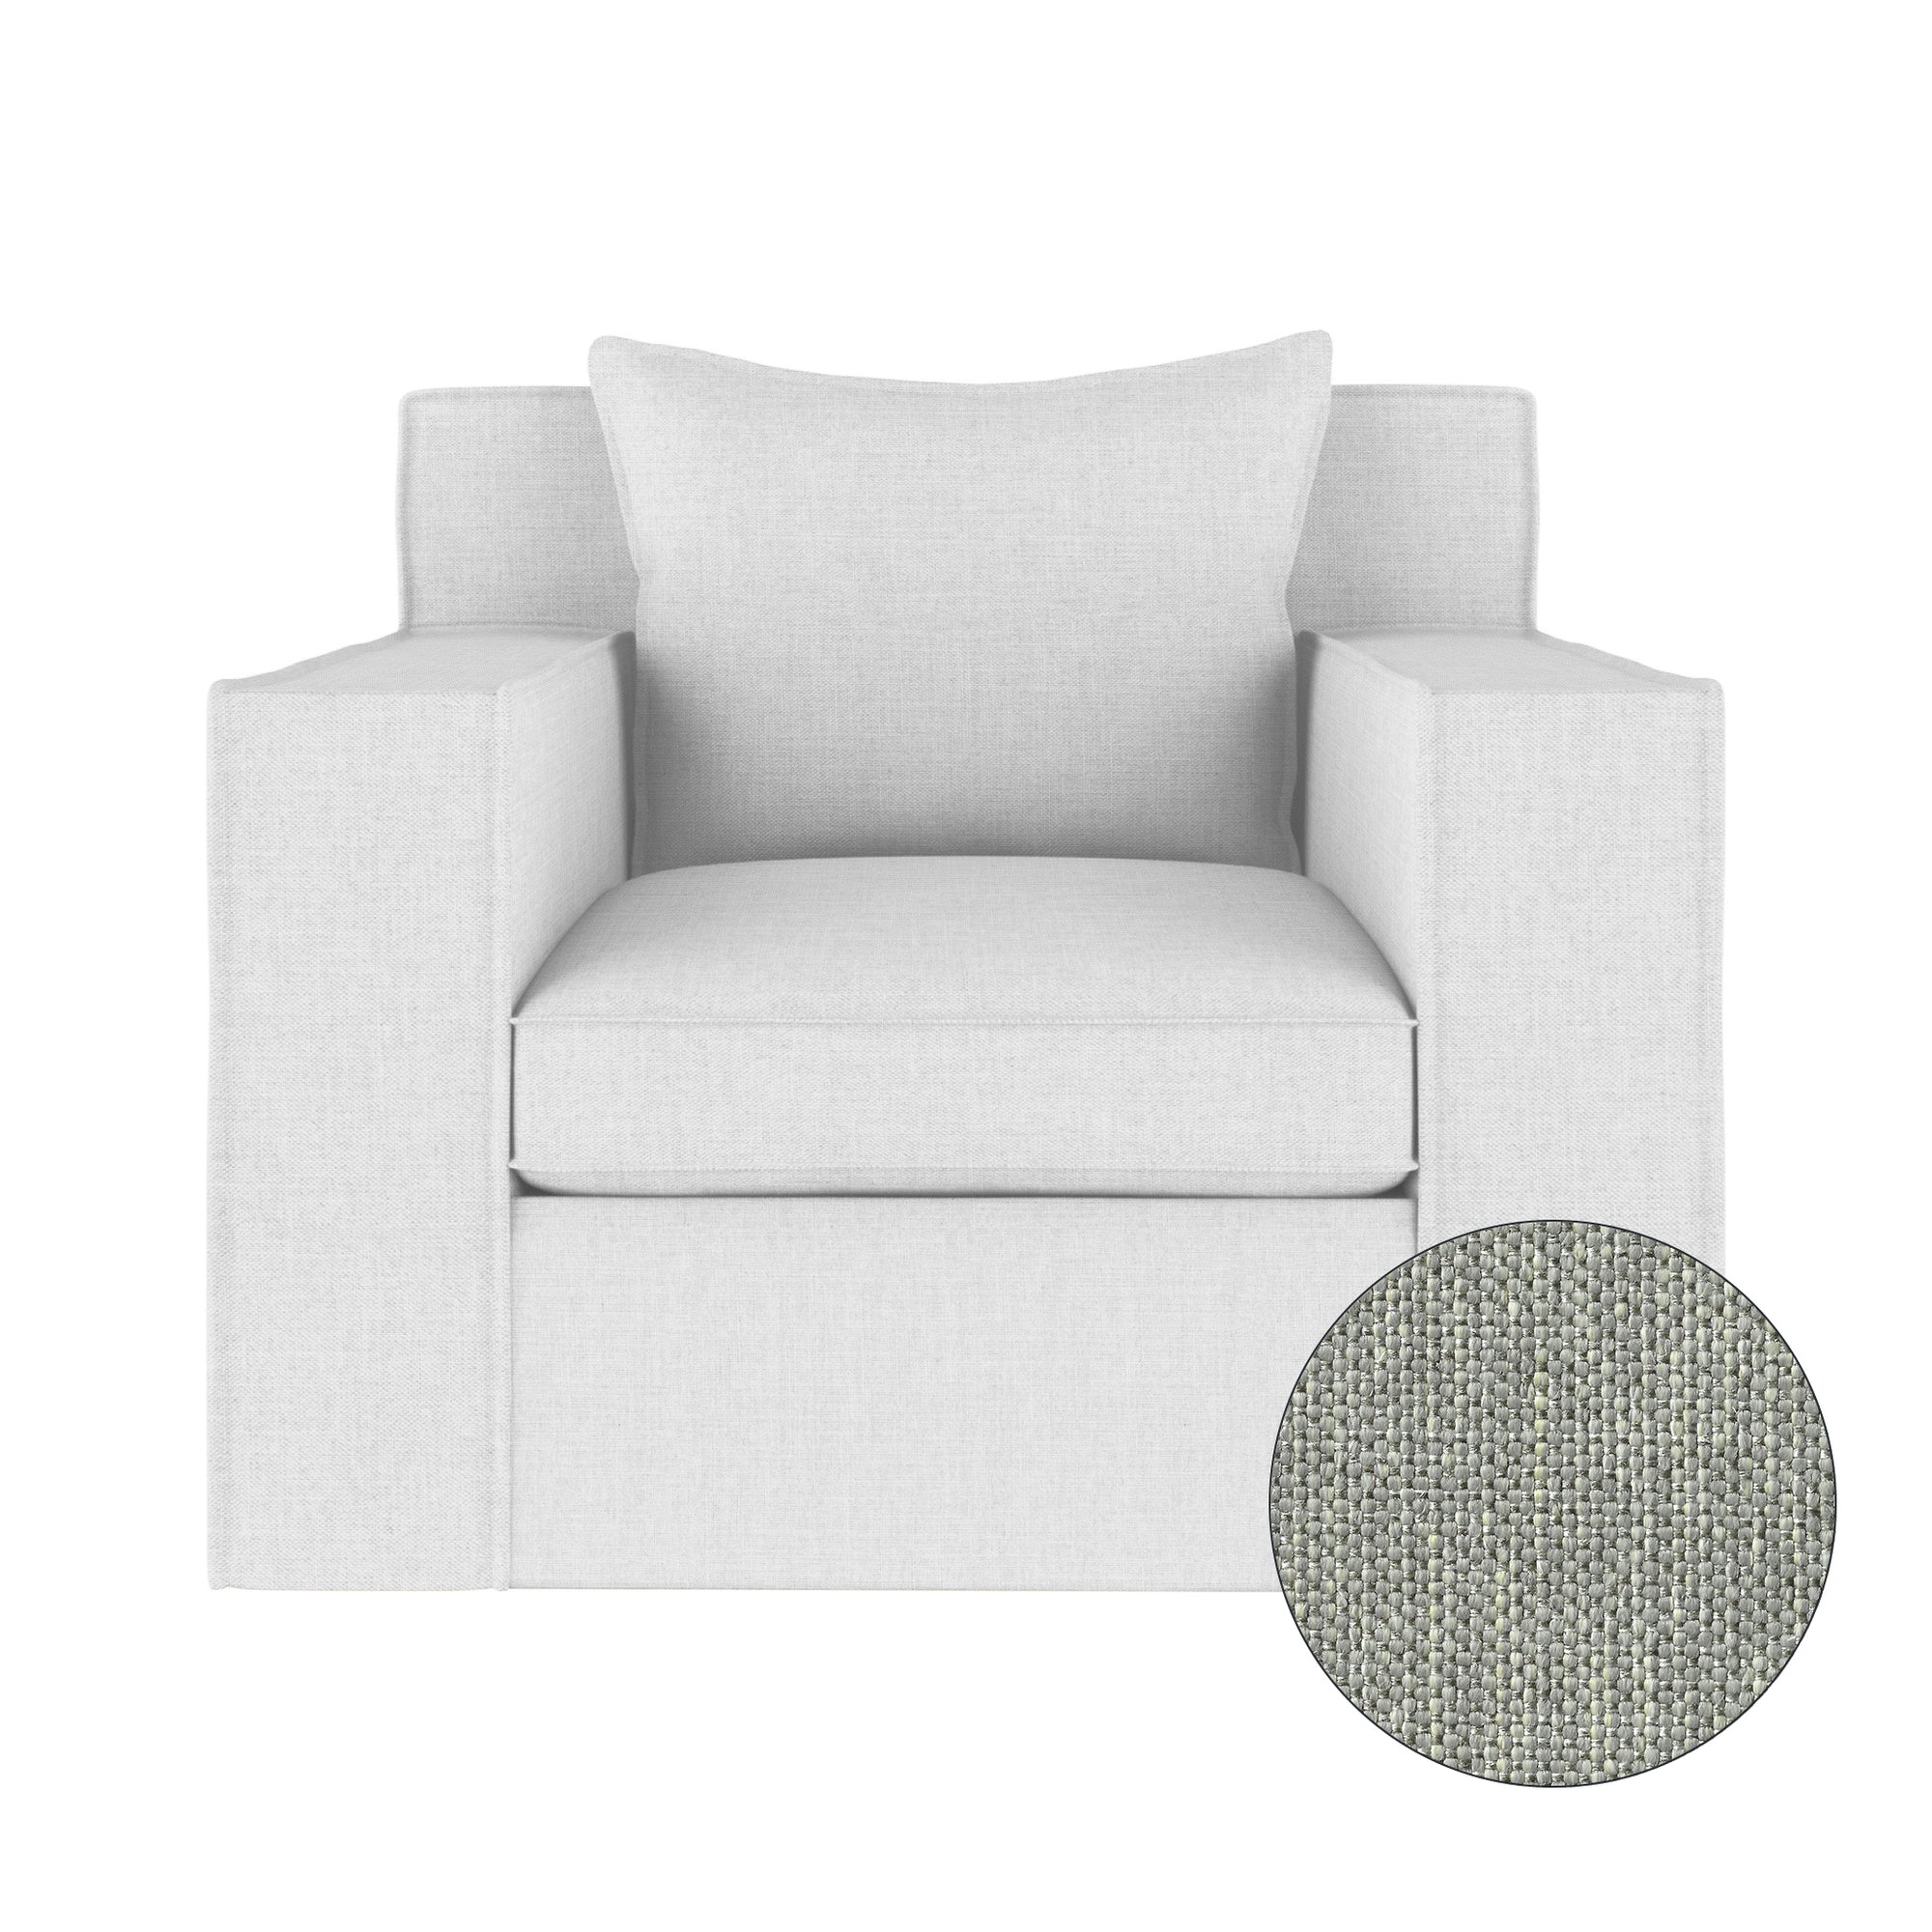 Mulberry Chair - Haze Pebble Weave Linen